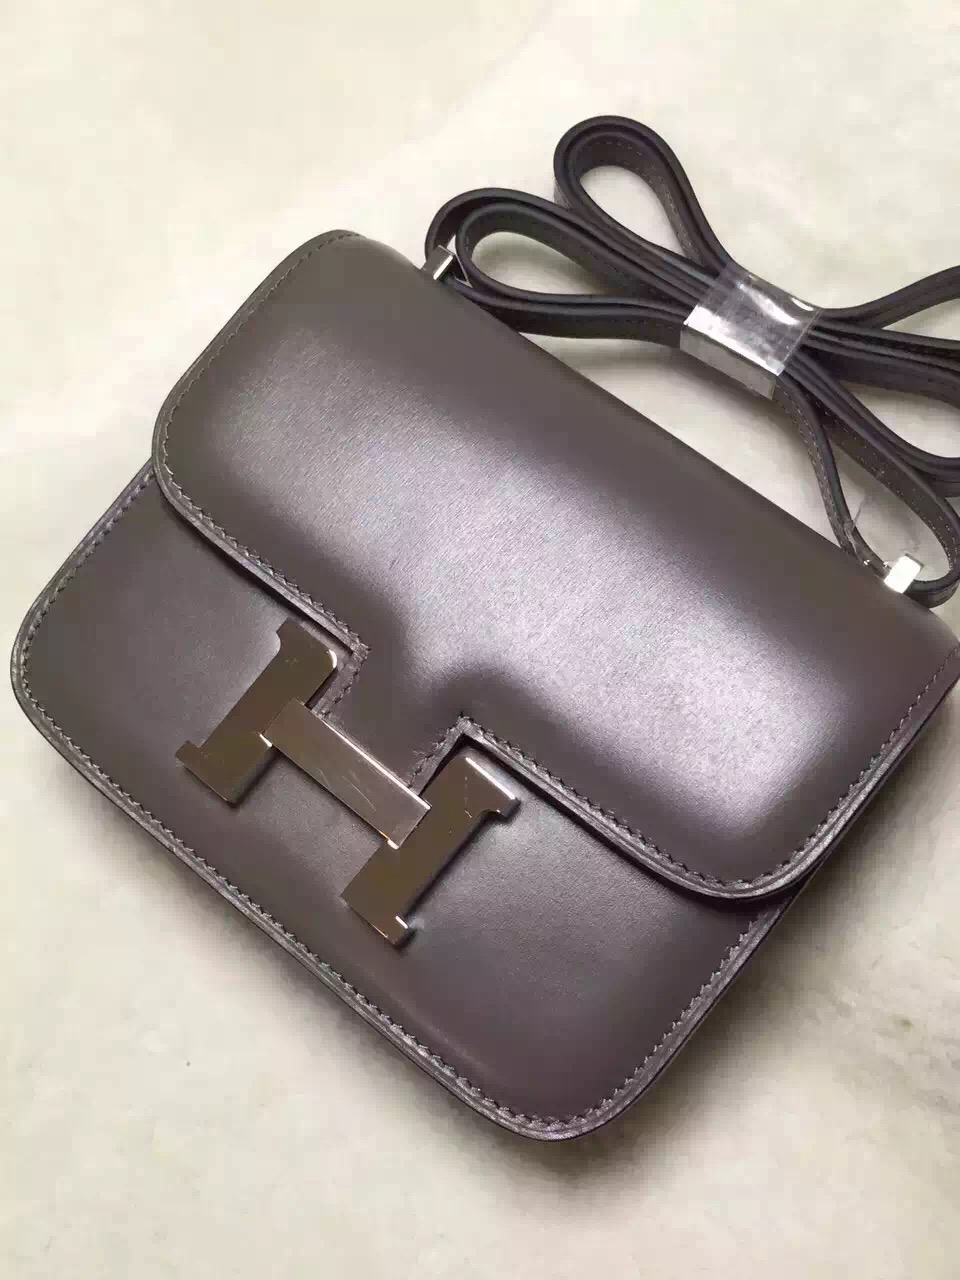 Hermes original box leather constance bag C023 gray